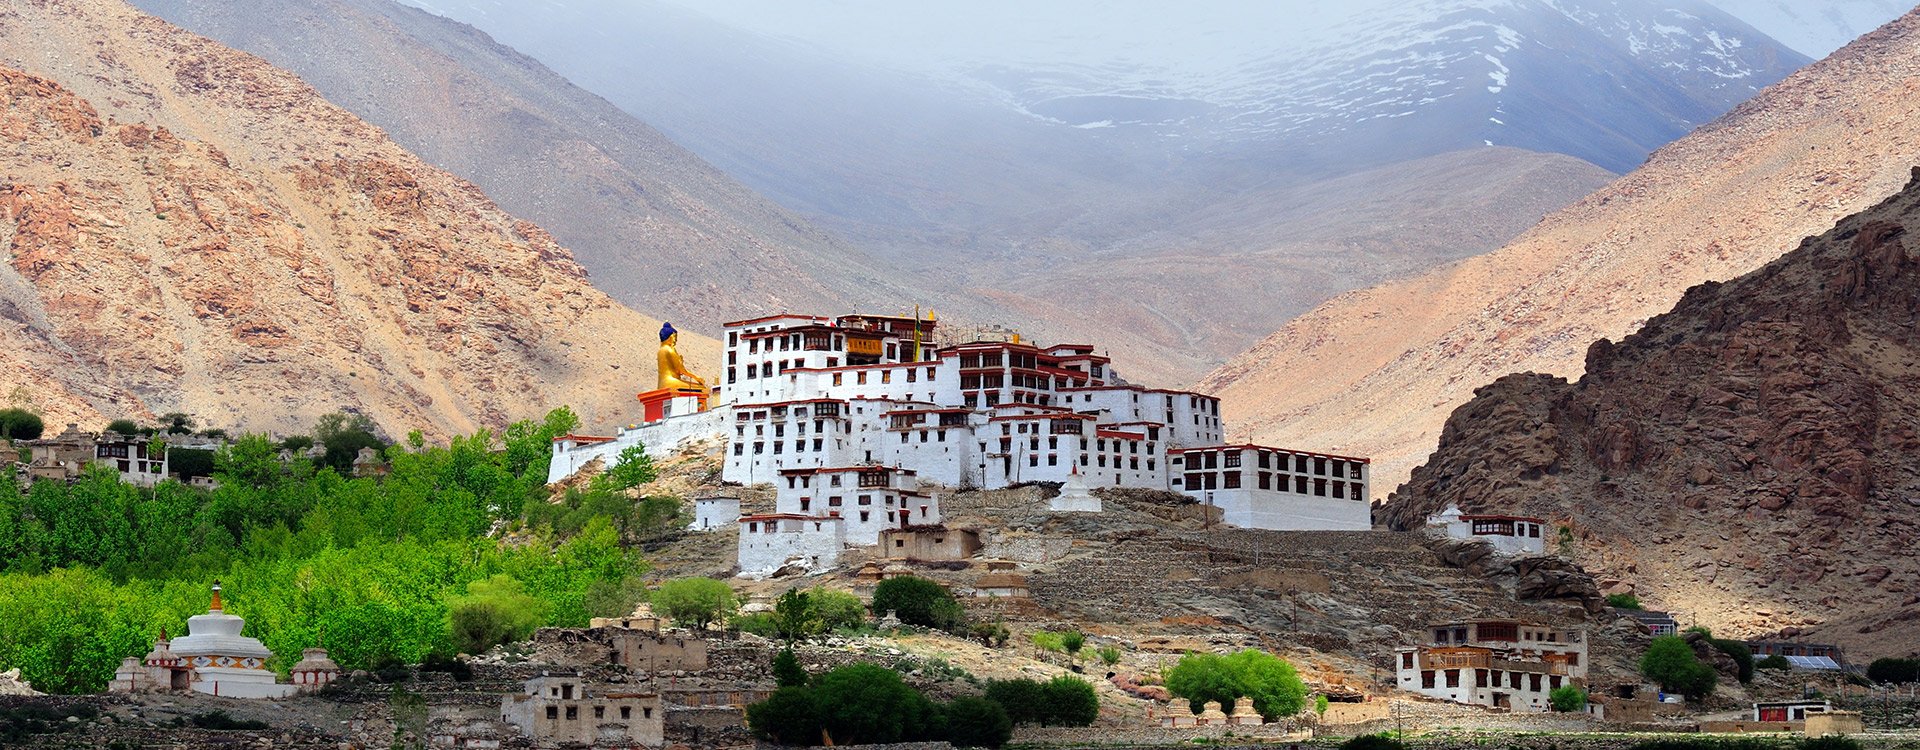 Likir-Monastery_Overview